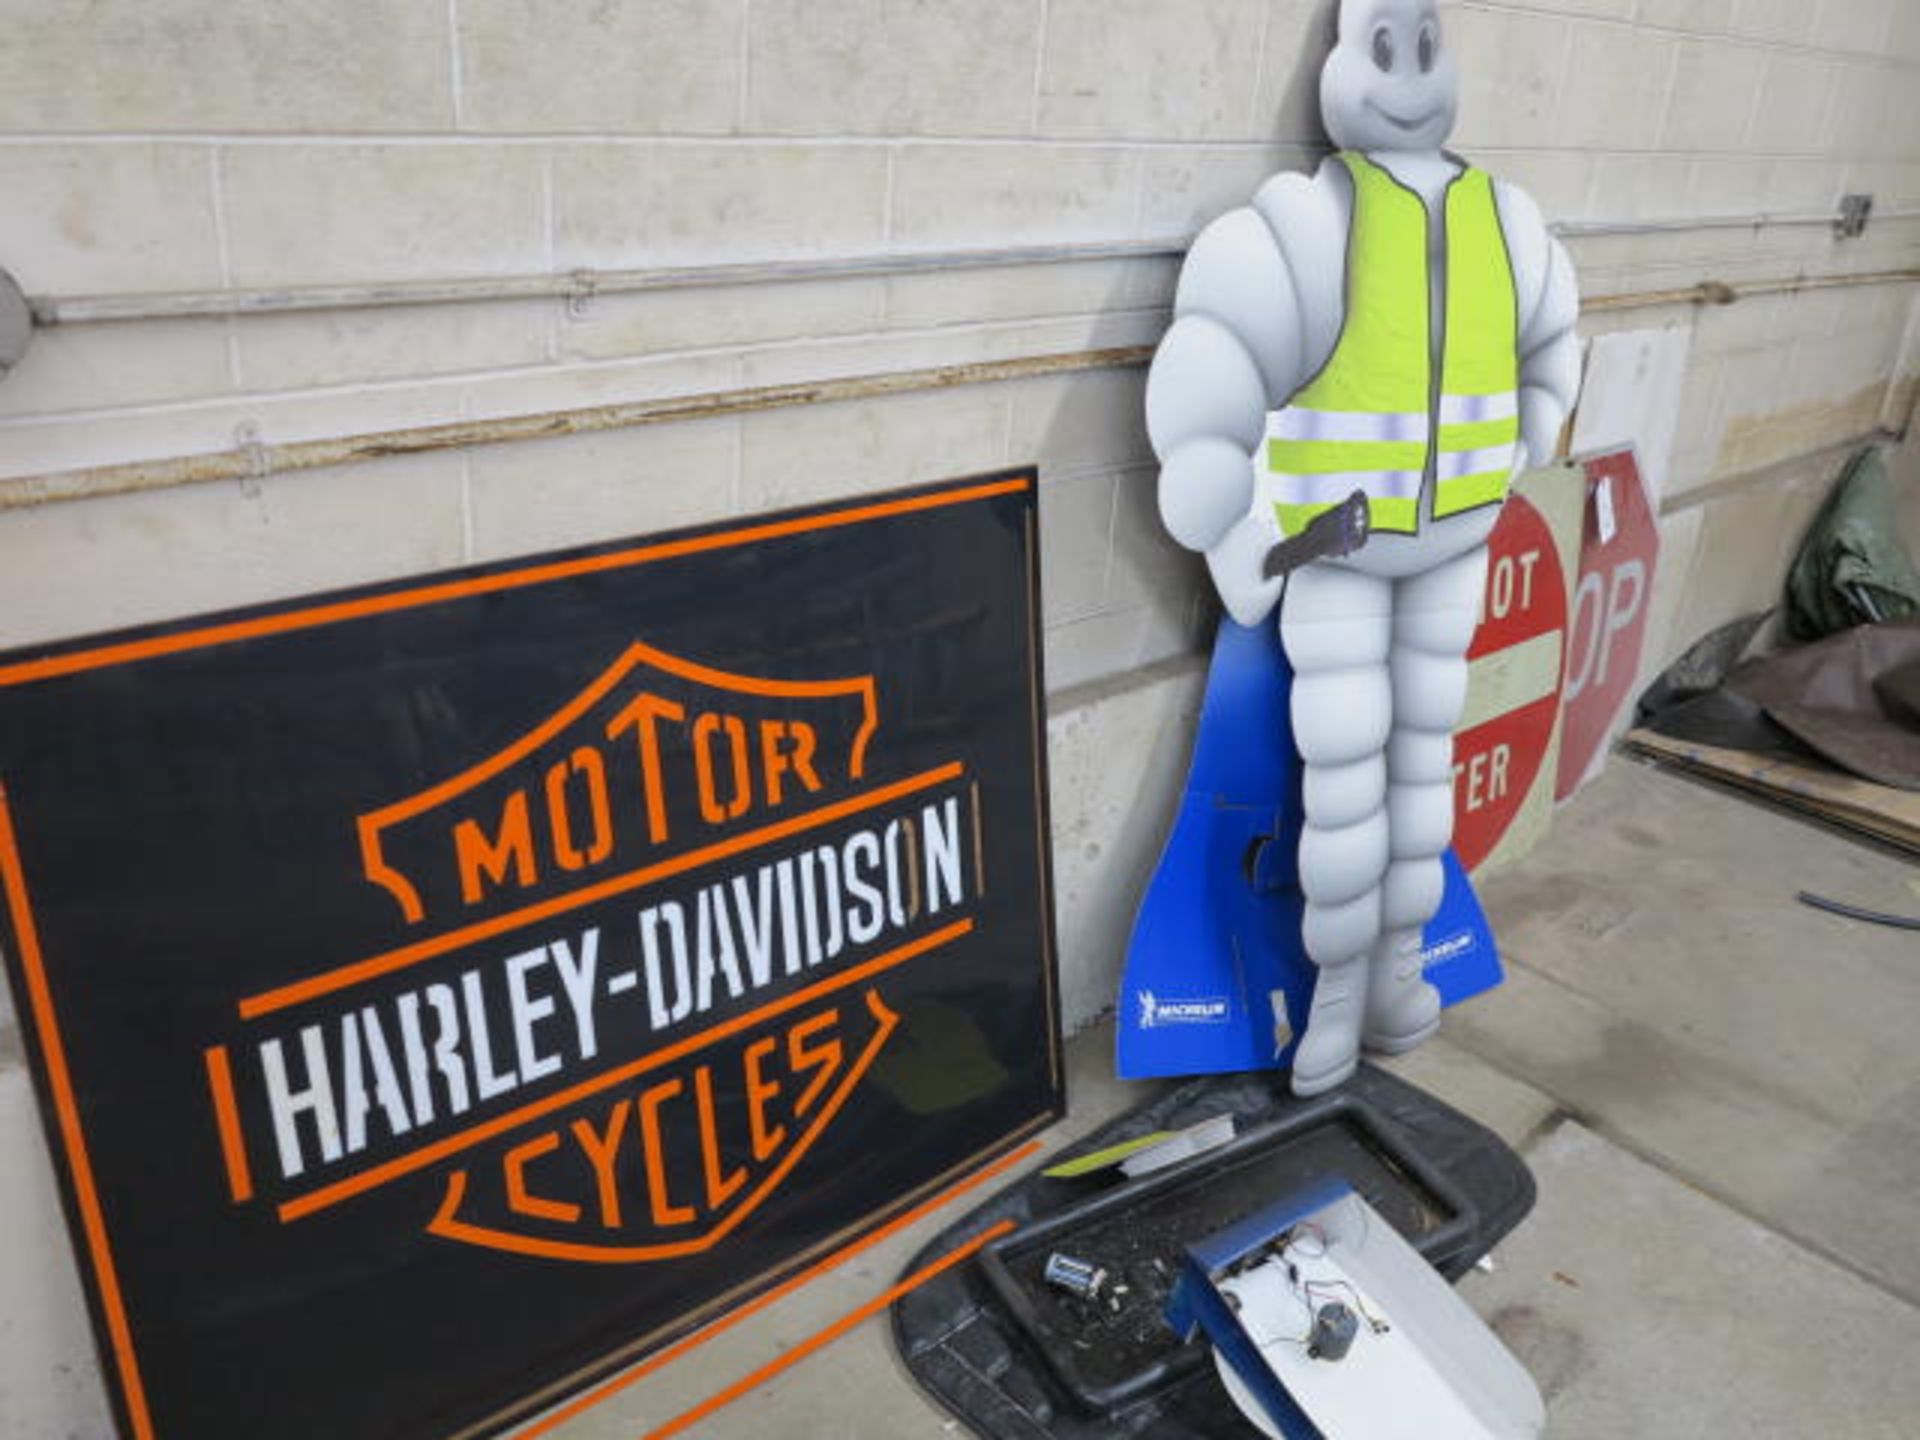 Lot Road and Harley Davidson Signs